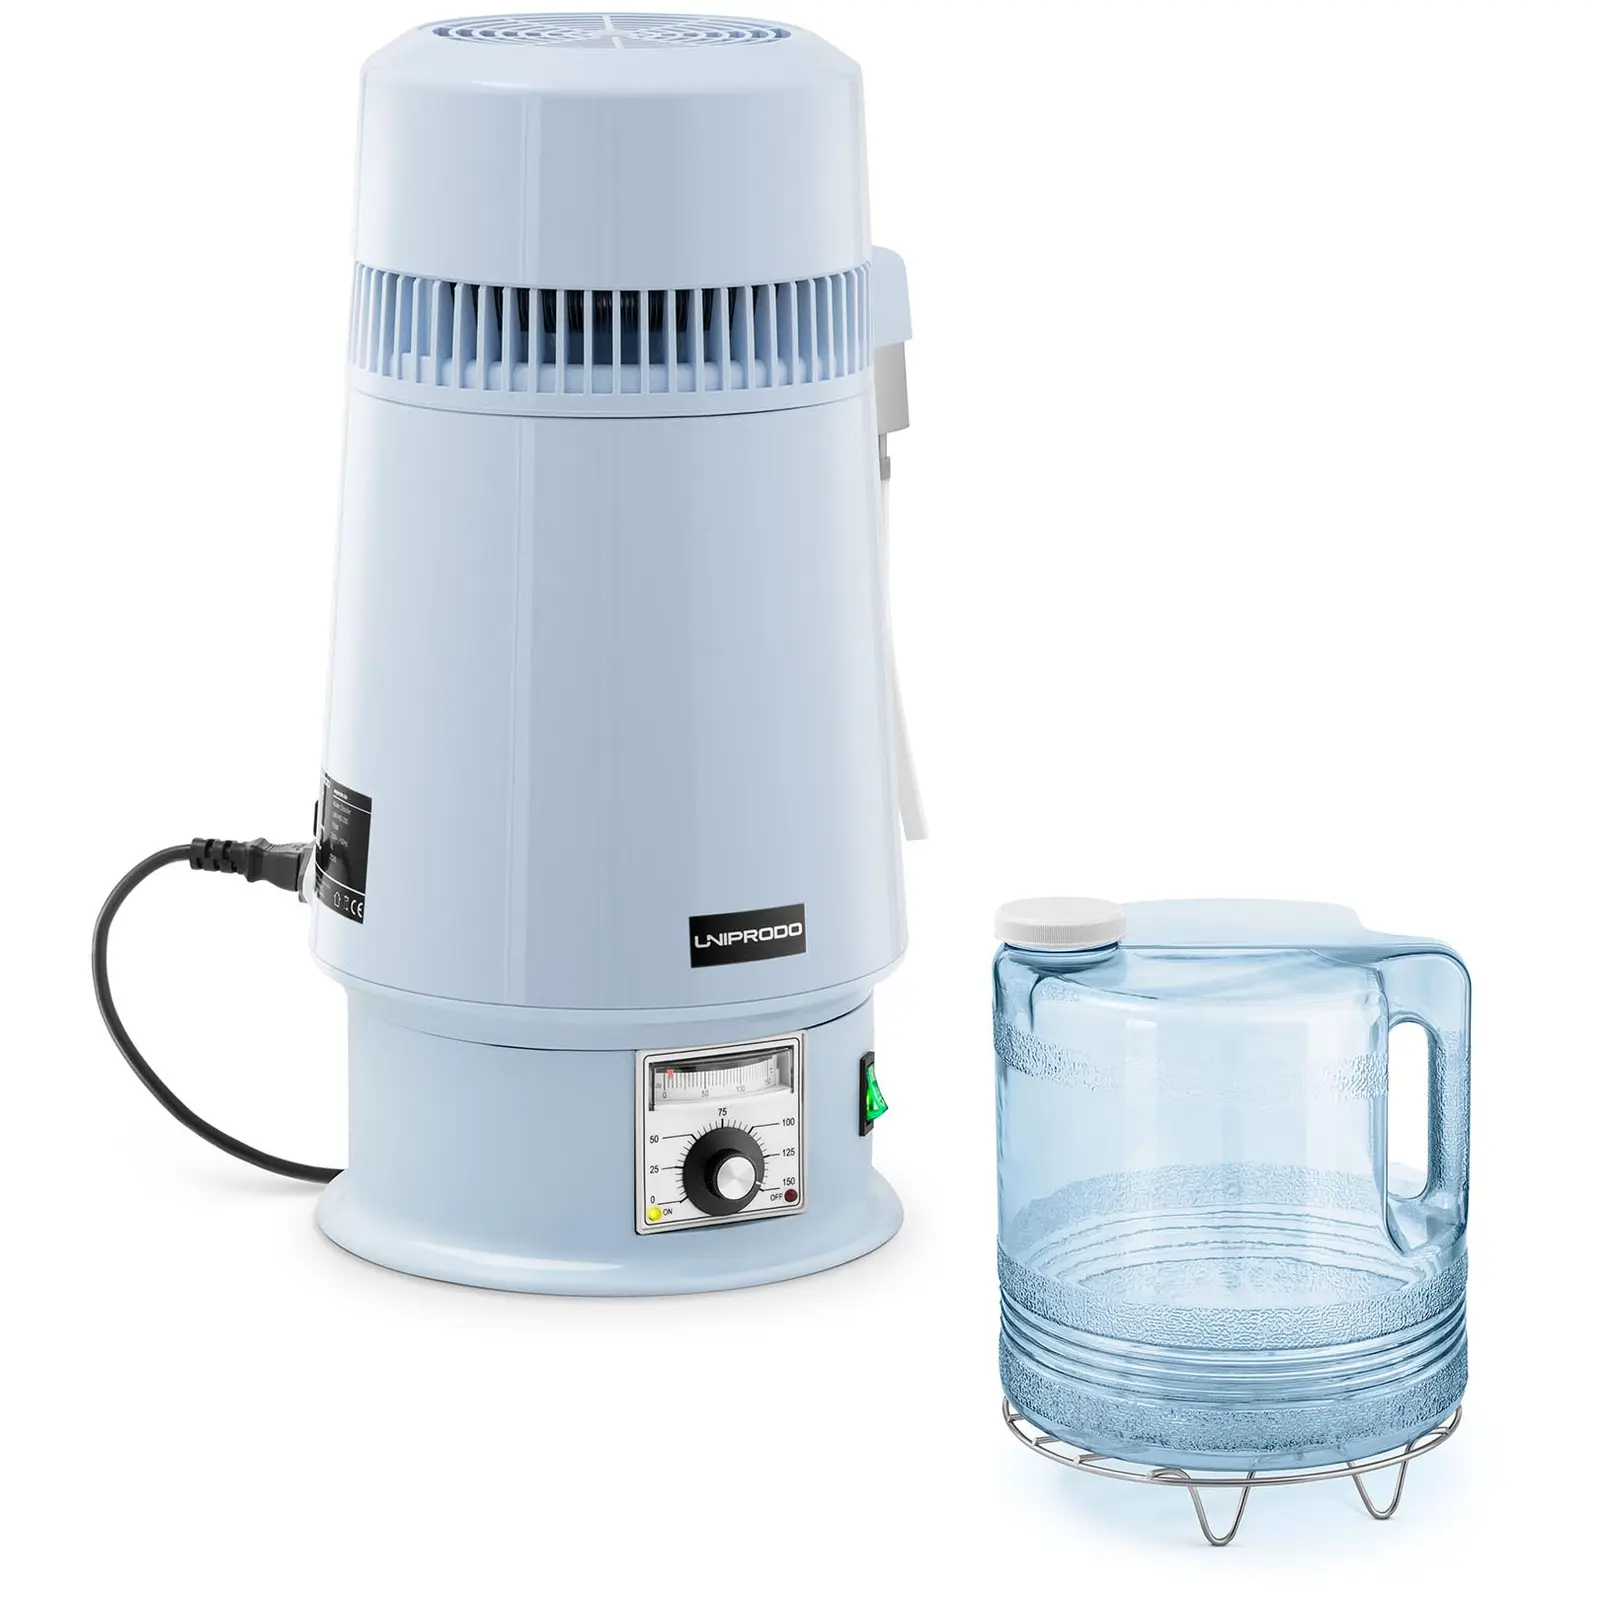 Vand-destillator - 4 l - temperaturregulering